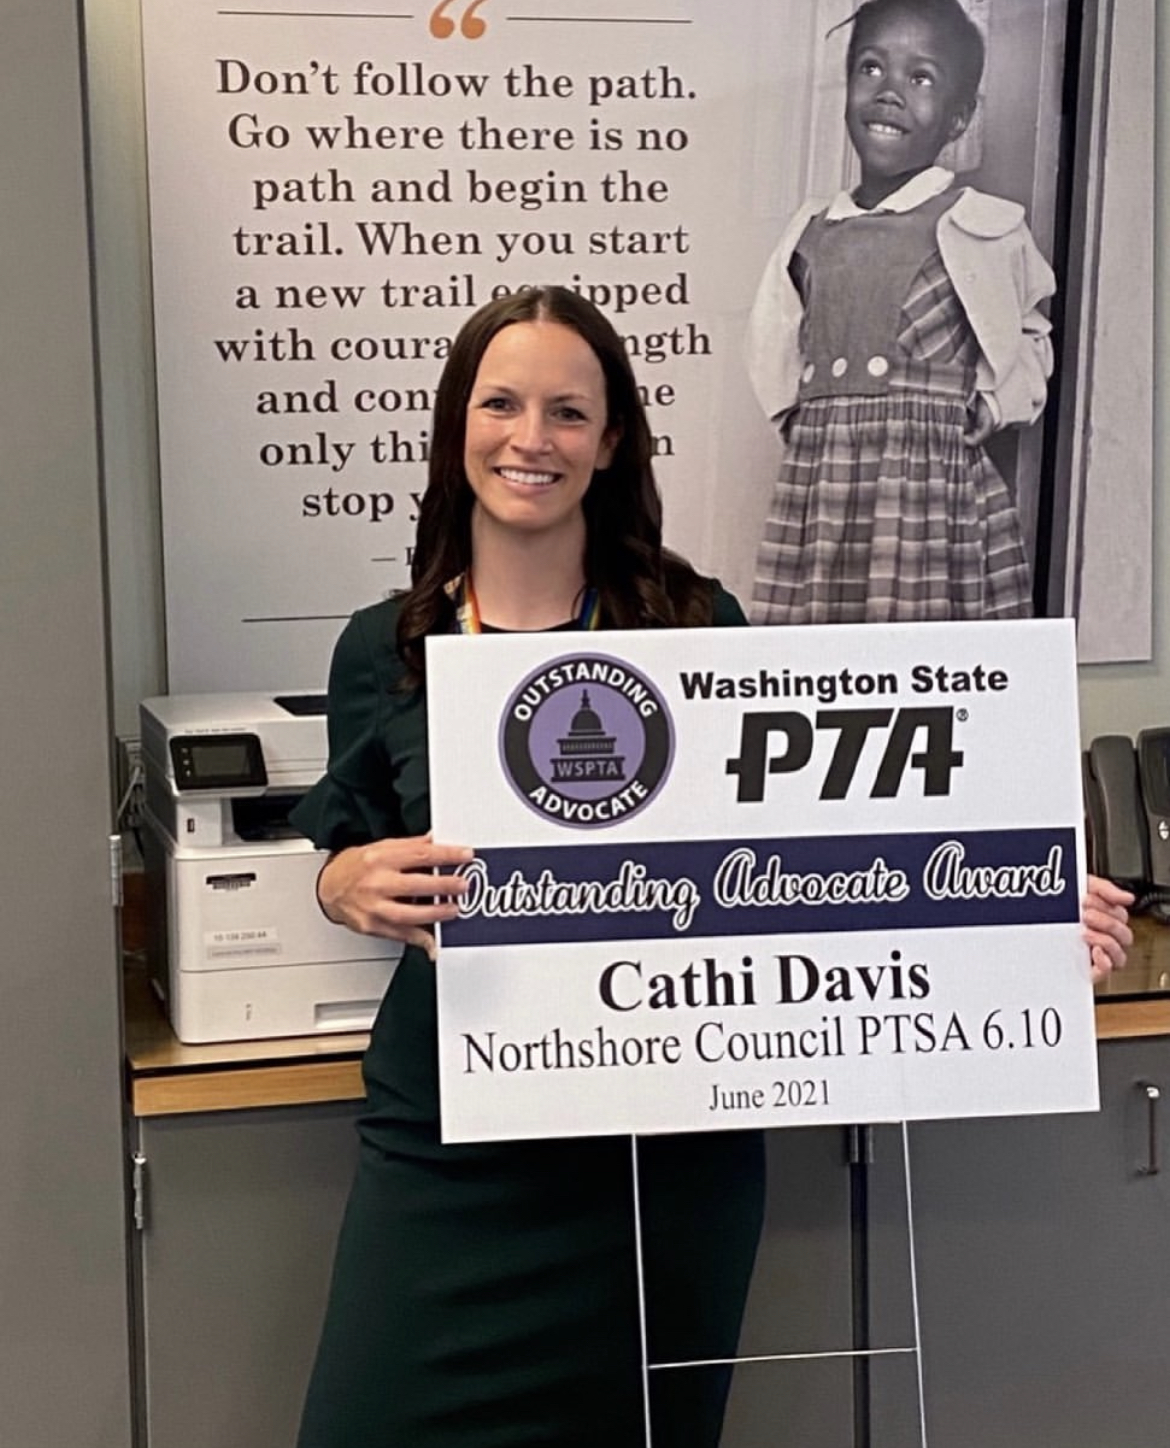 Cathi Davis holding a PTA award